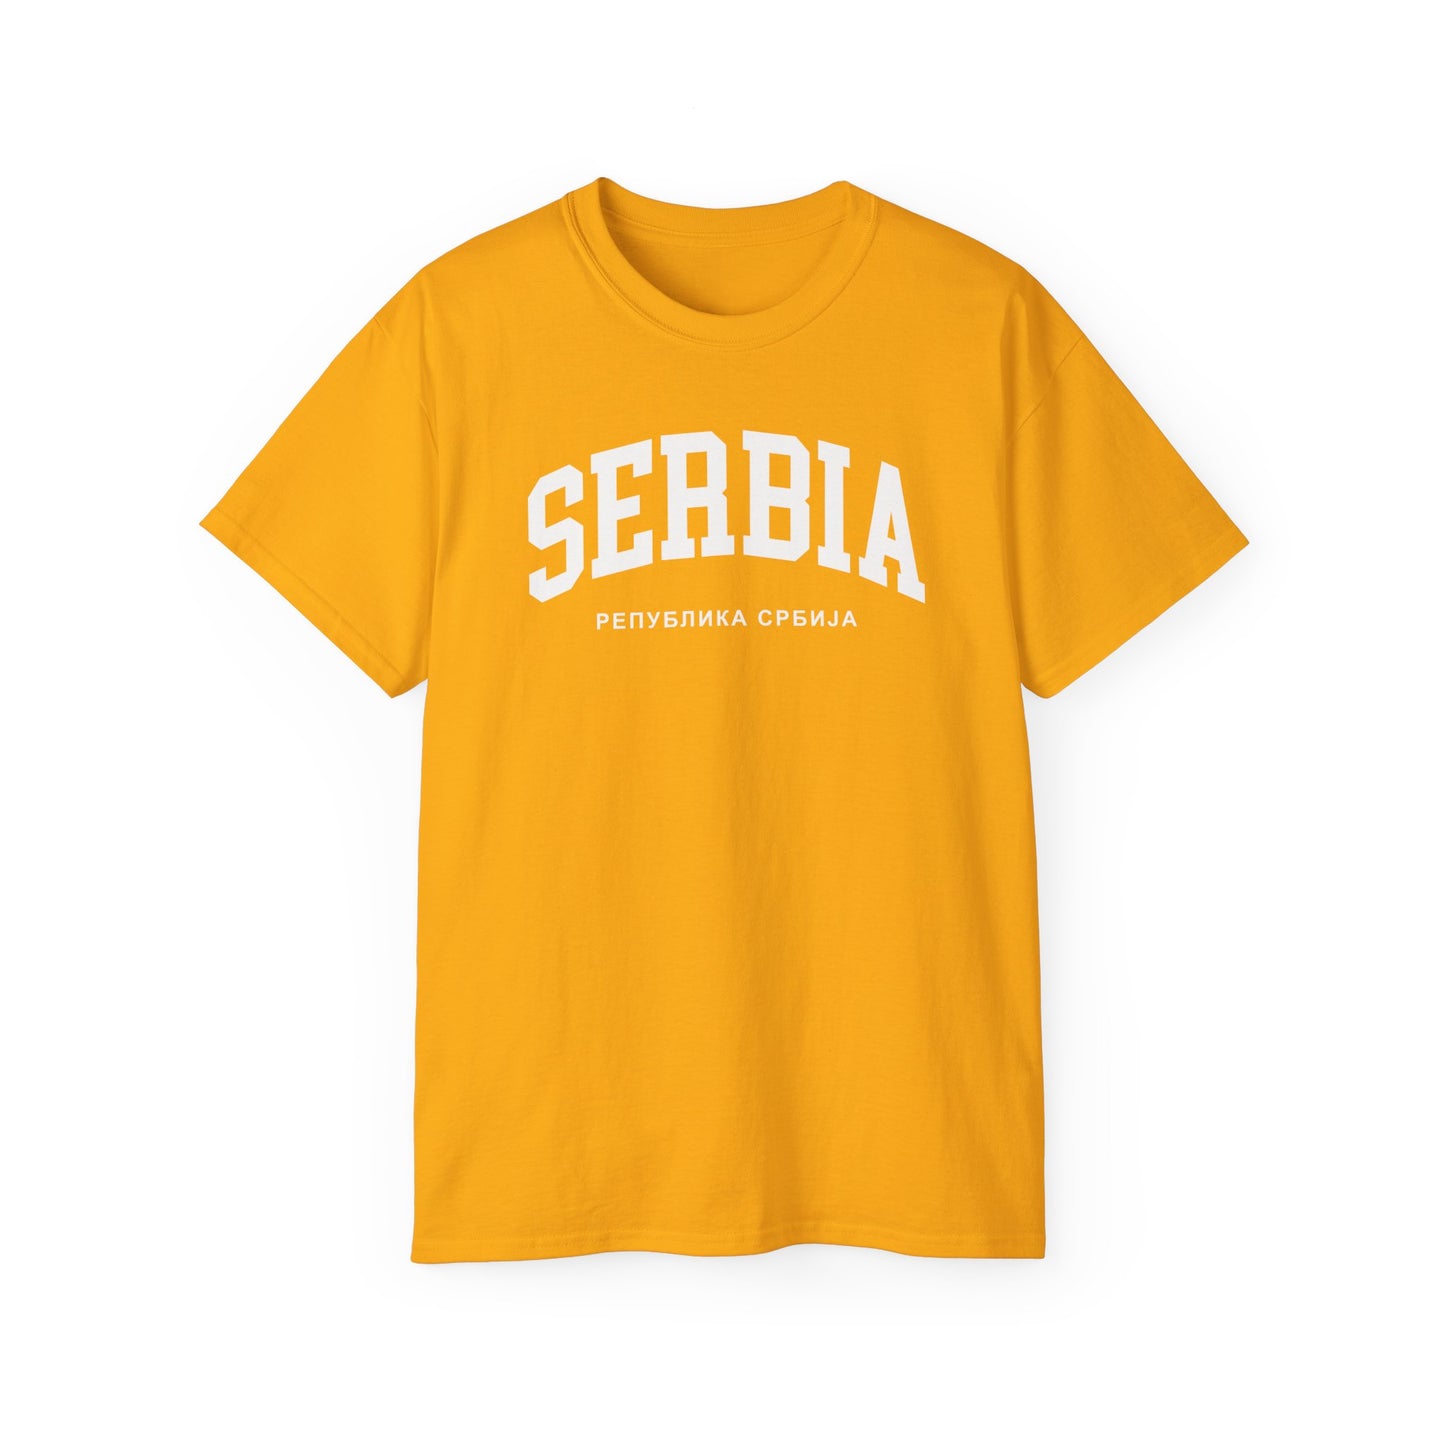 Serbia Tee